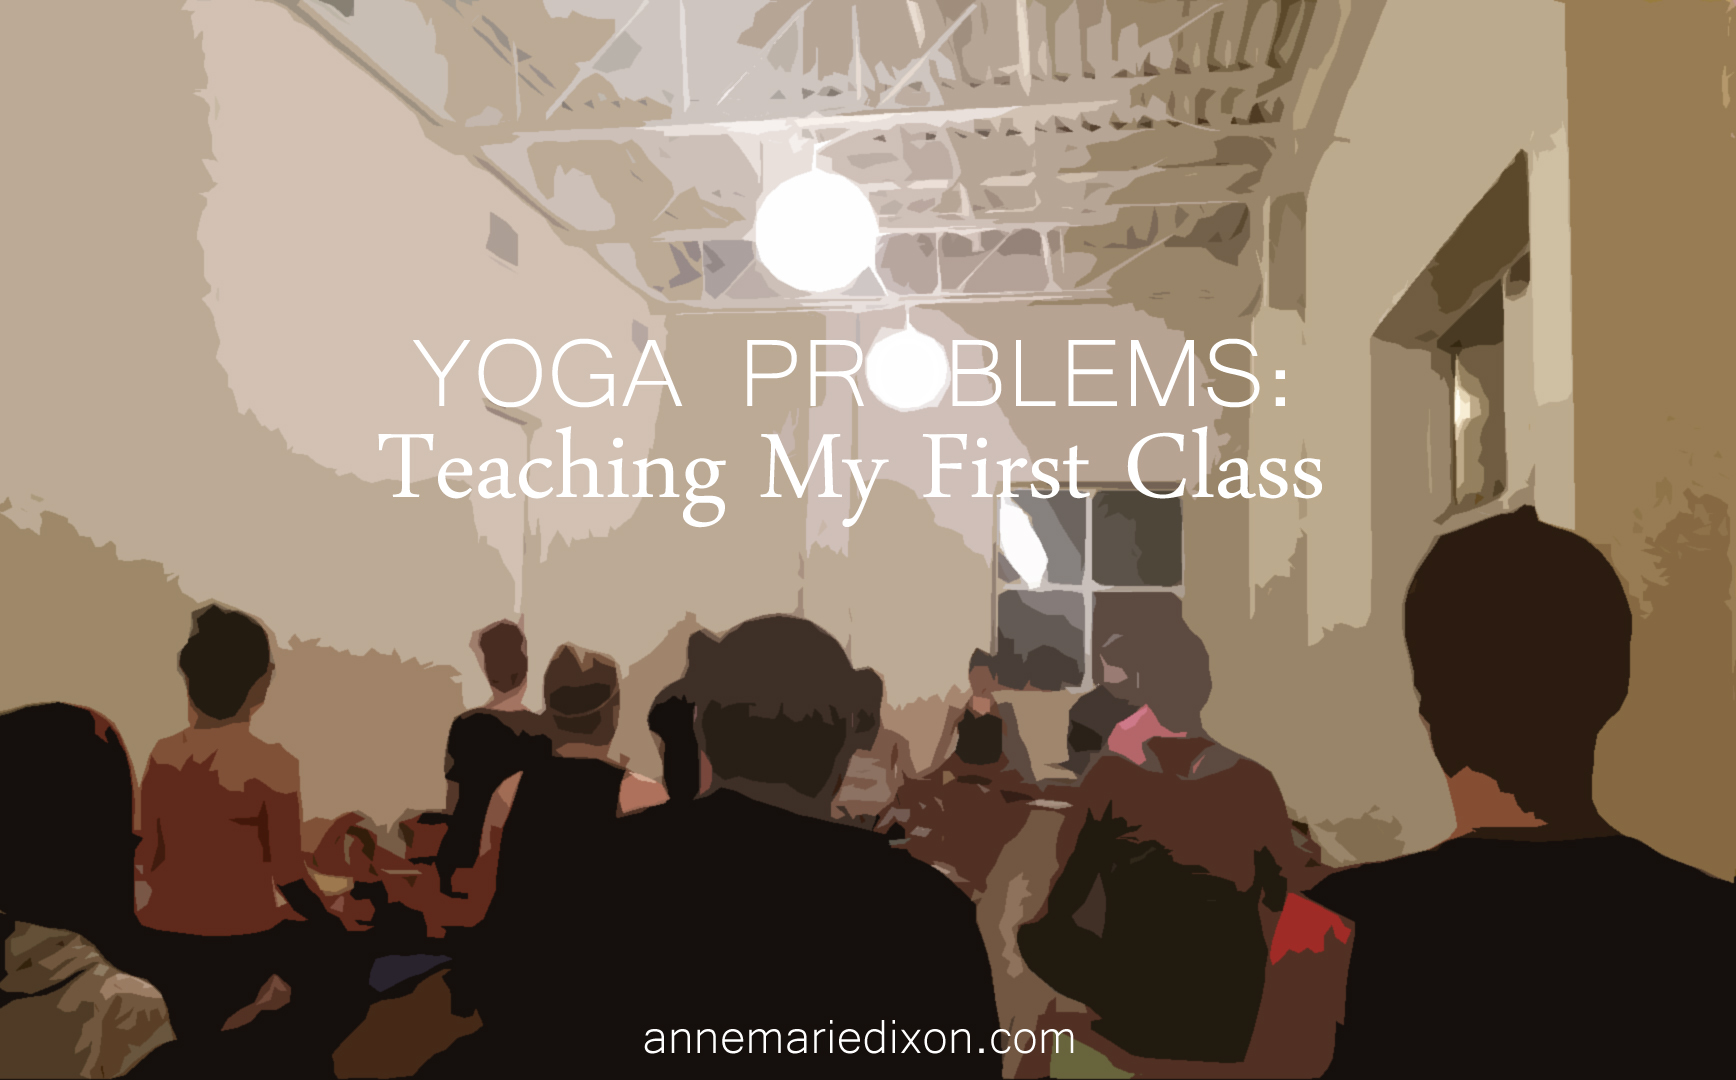 class full of yogis